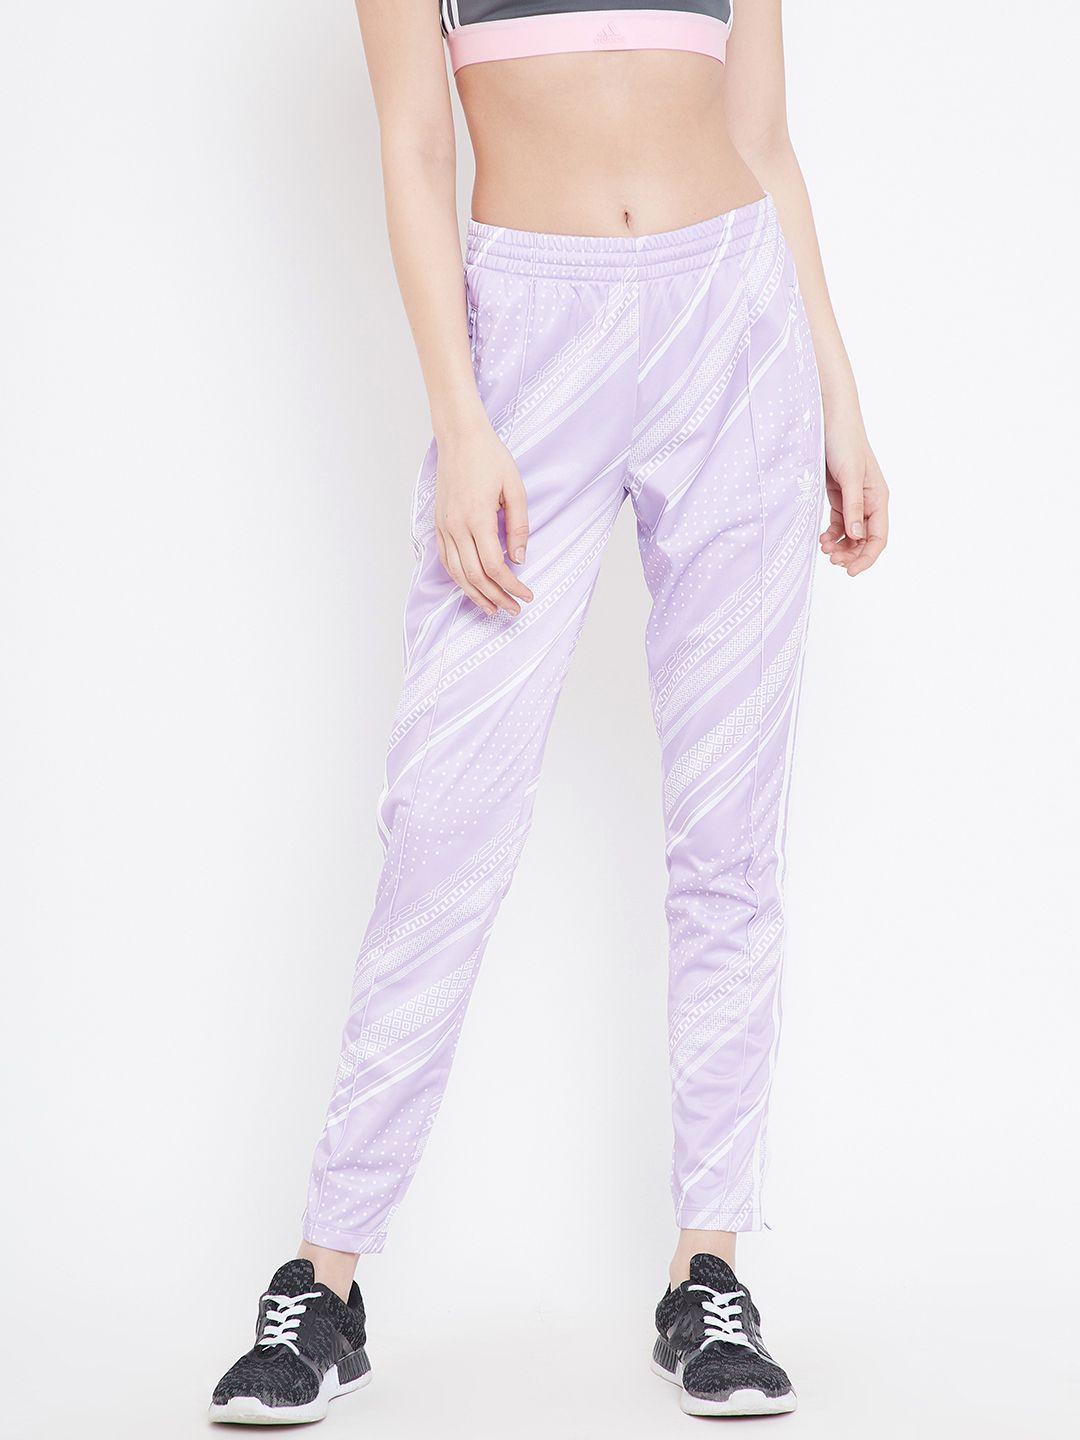 adidas-originals-women-lavender-&-white-printed-sst-track-pants